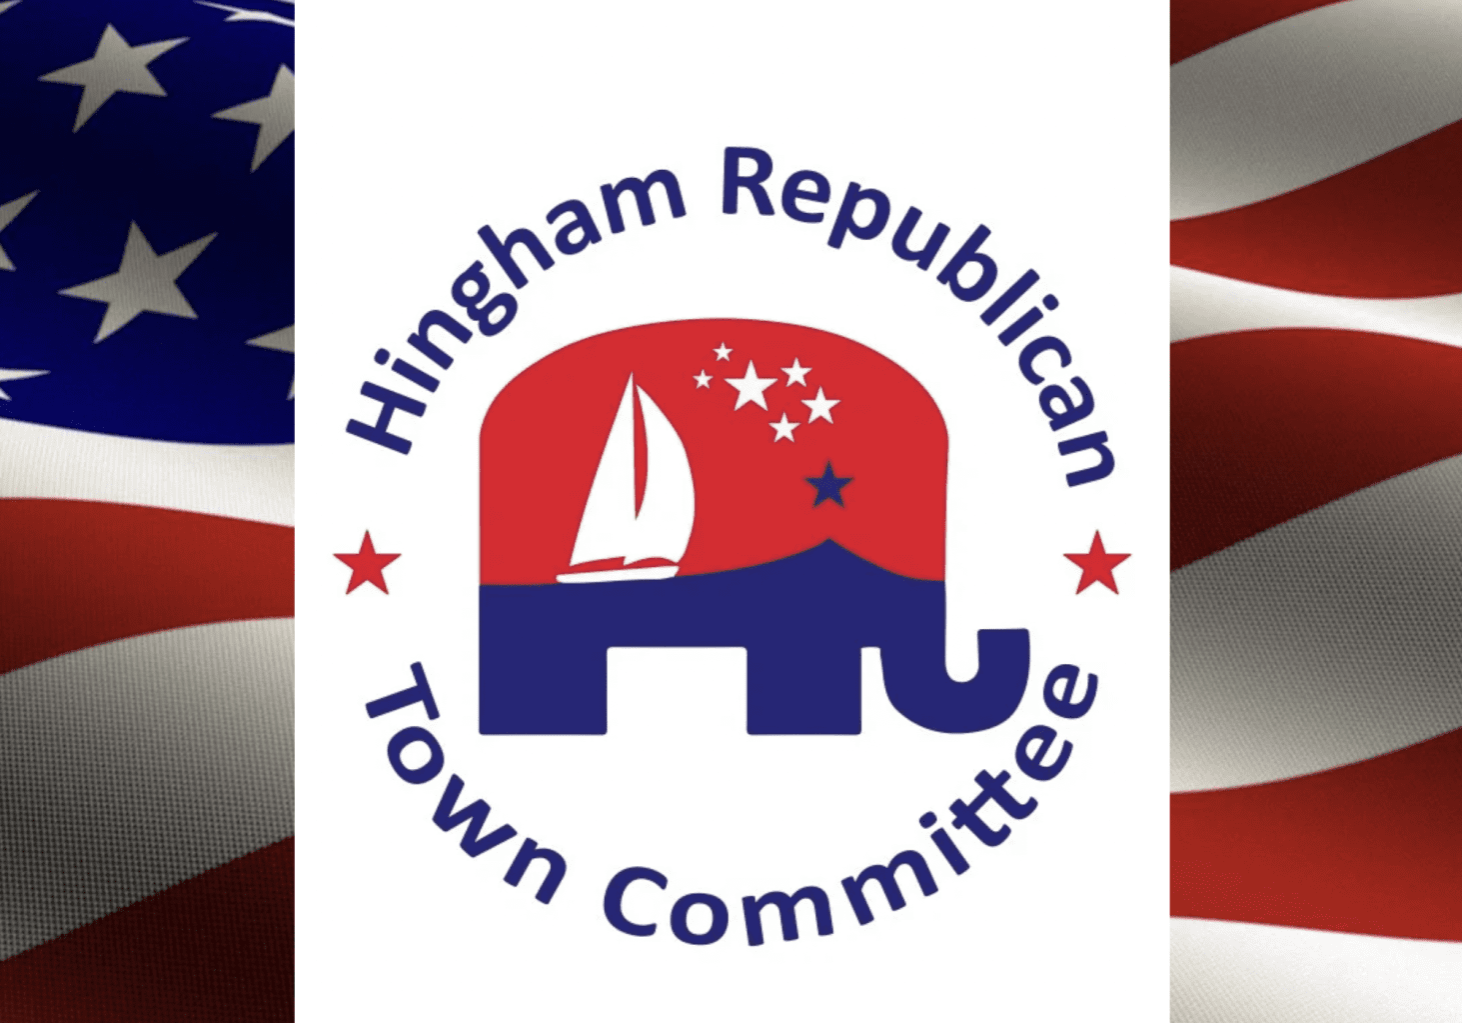 Hingham Republican Town Committee